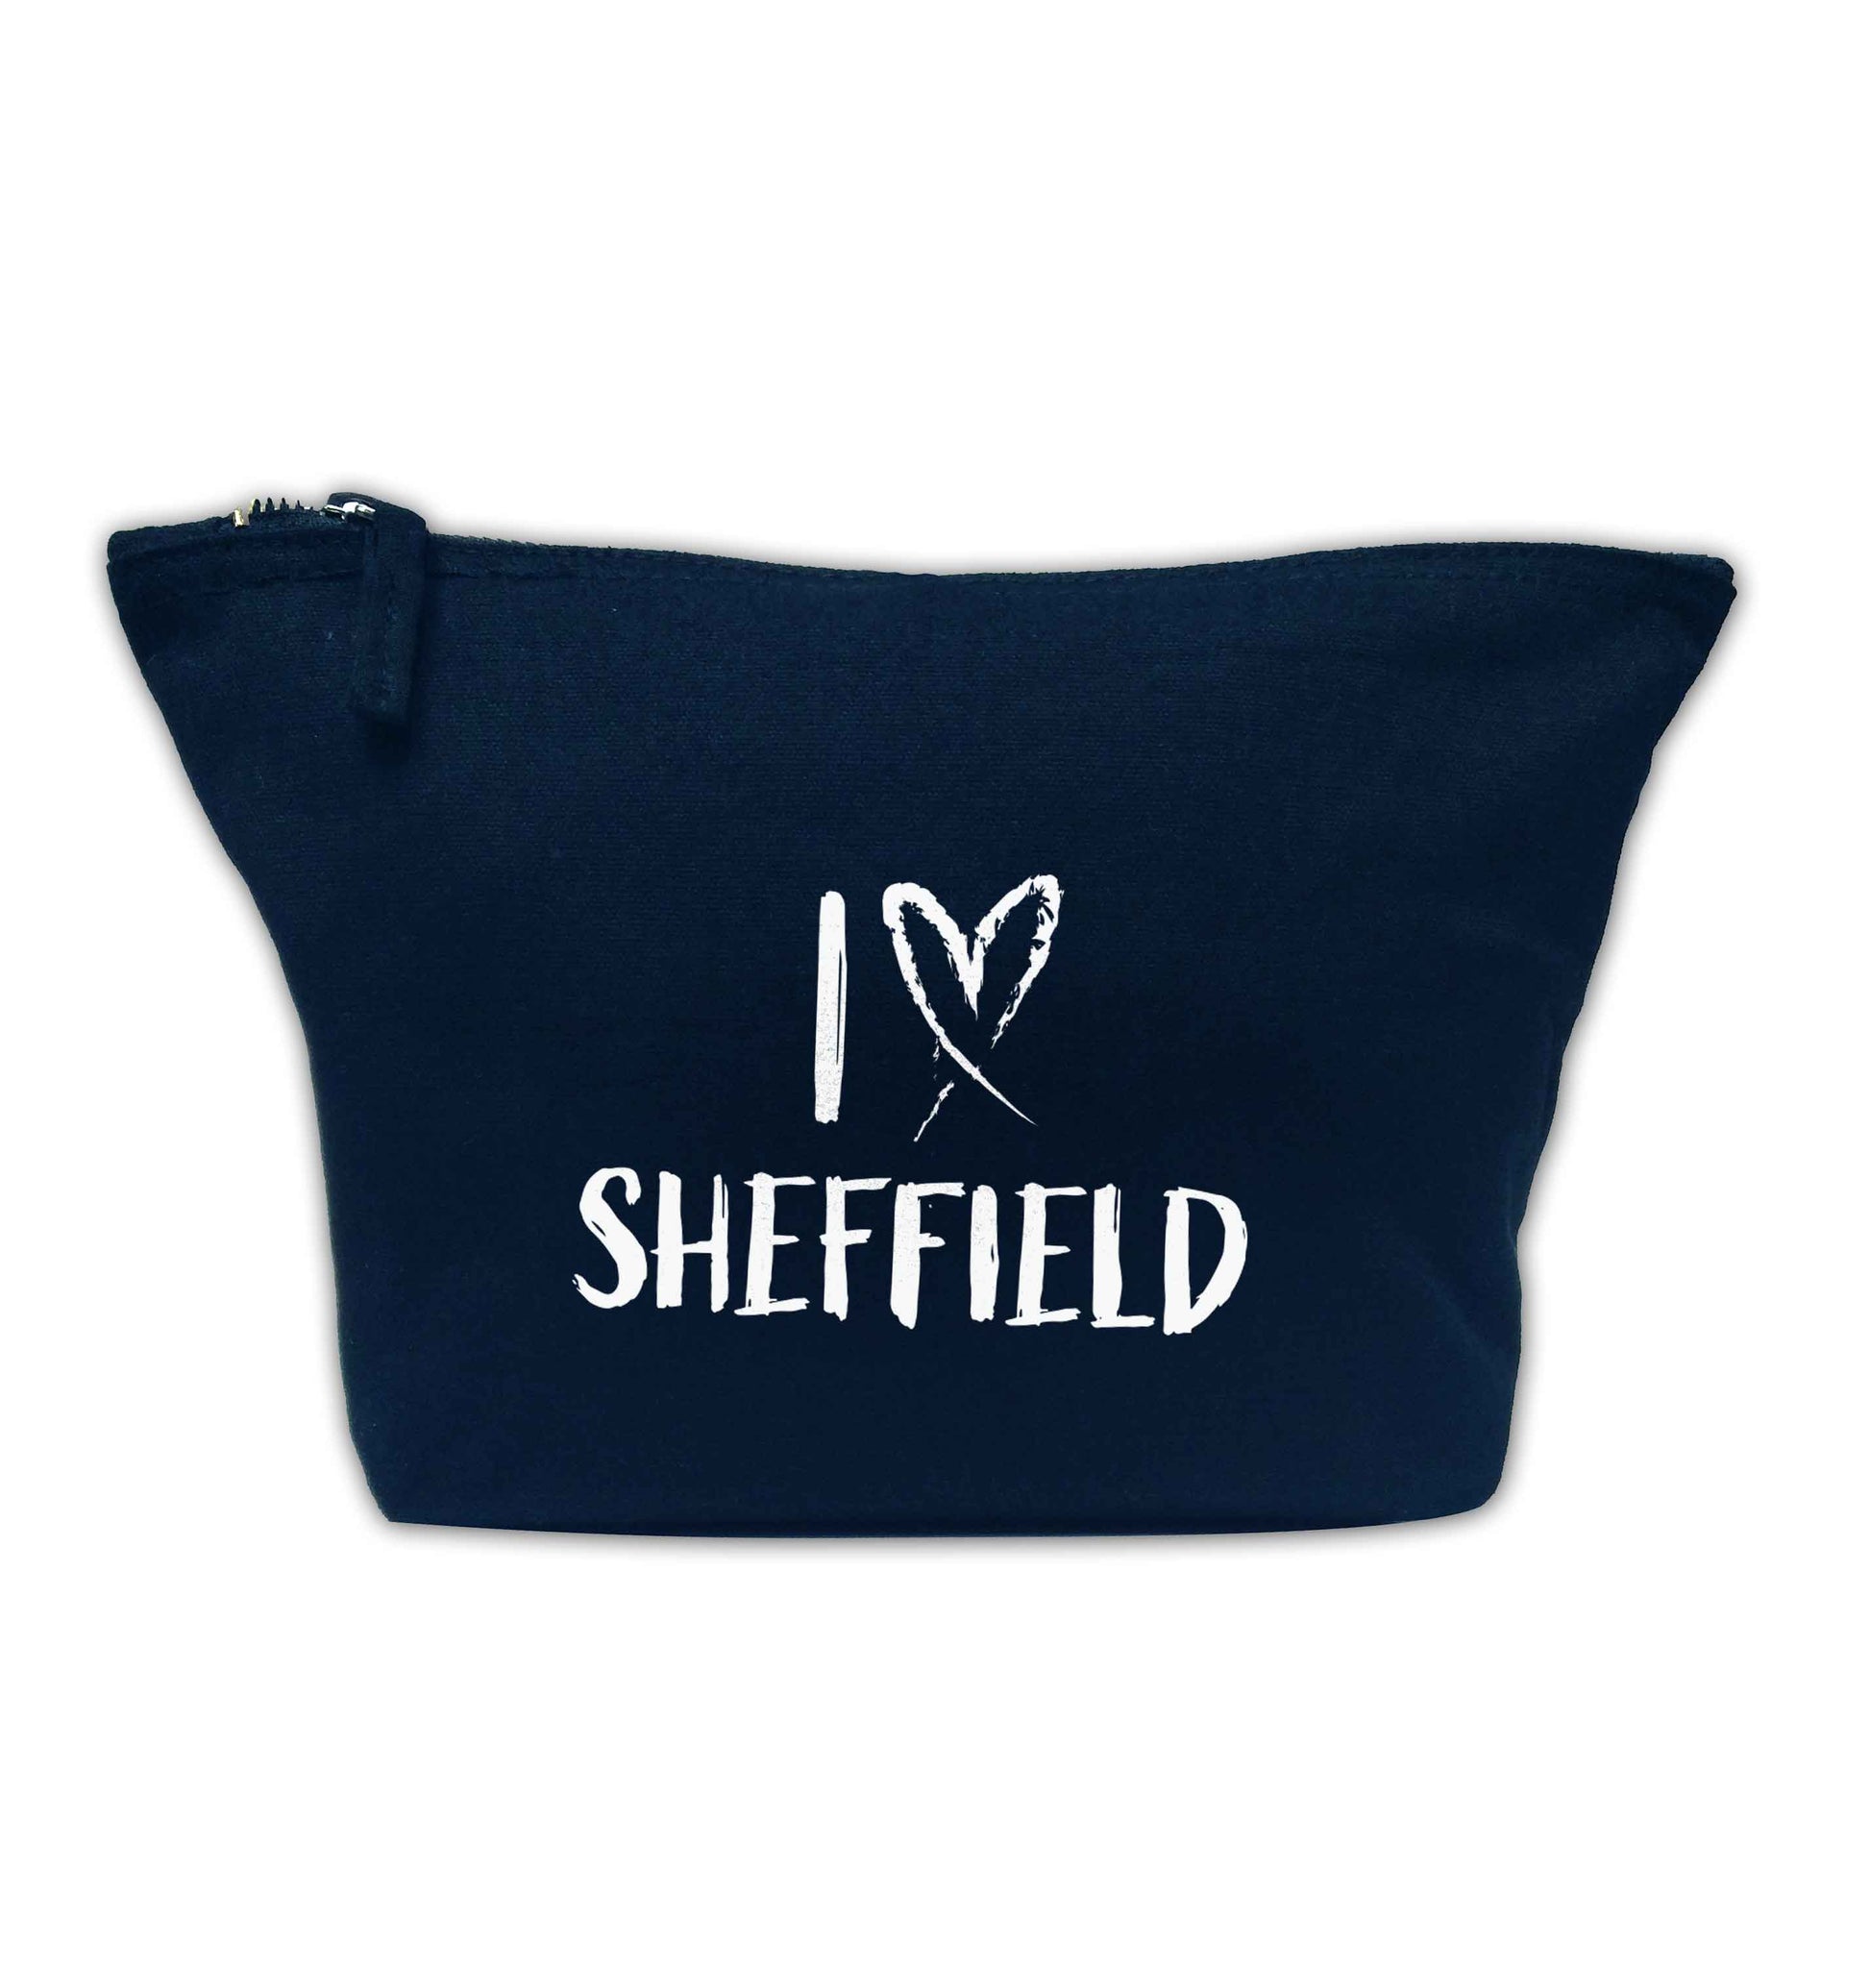 I love Sheffield navy makeup bag